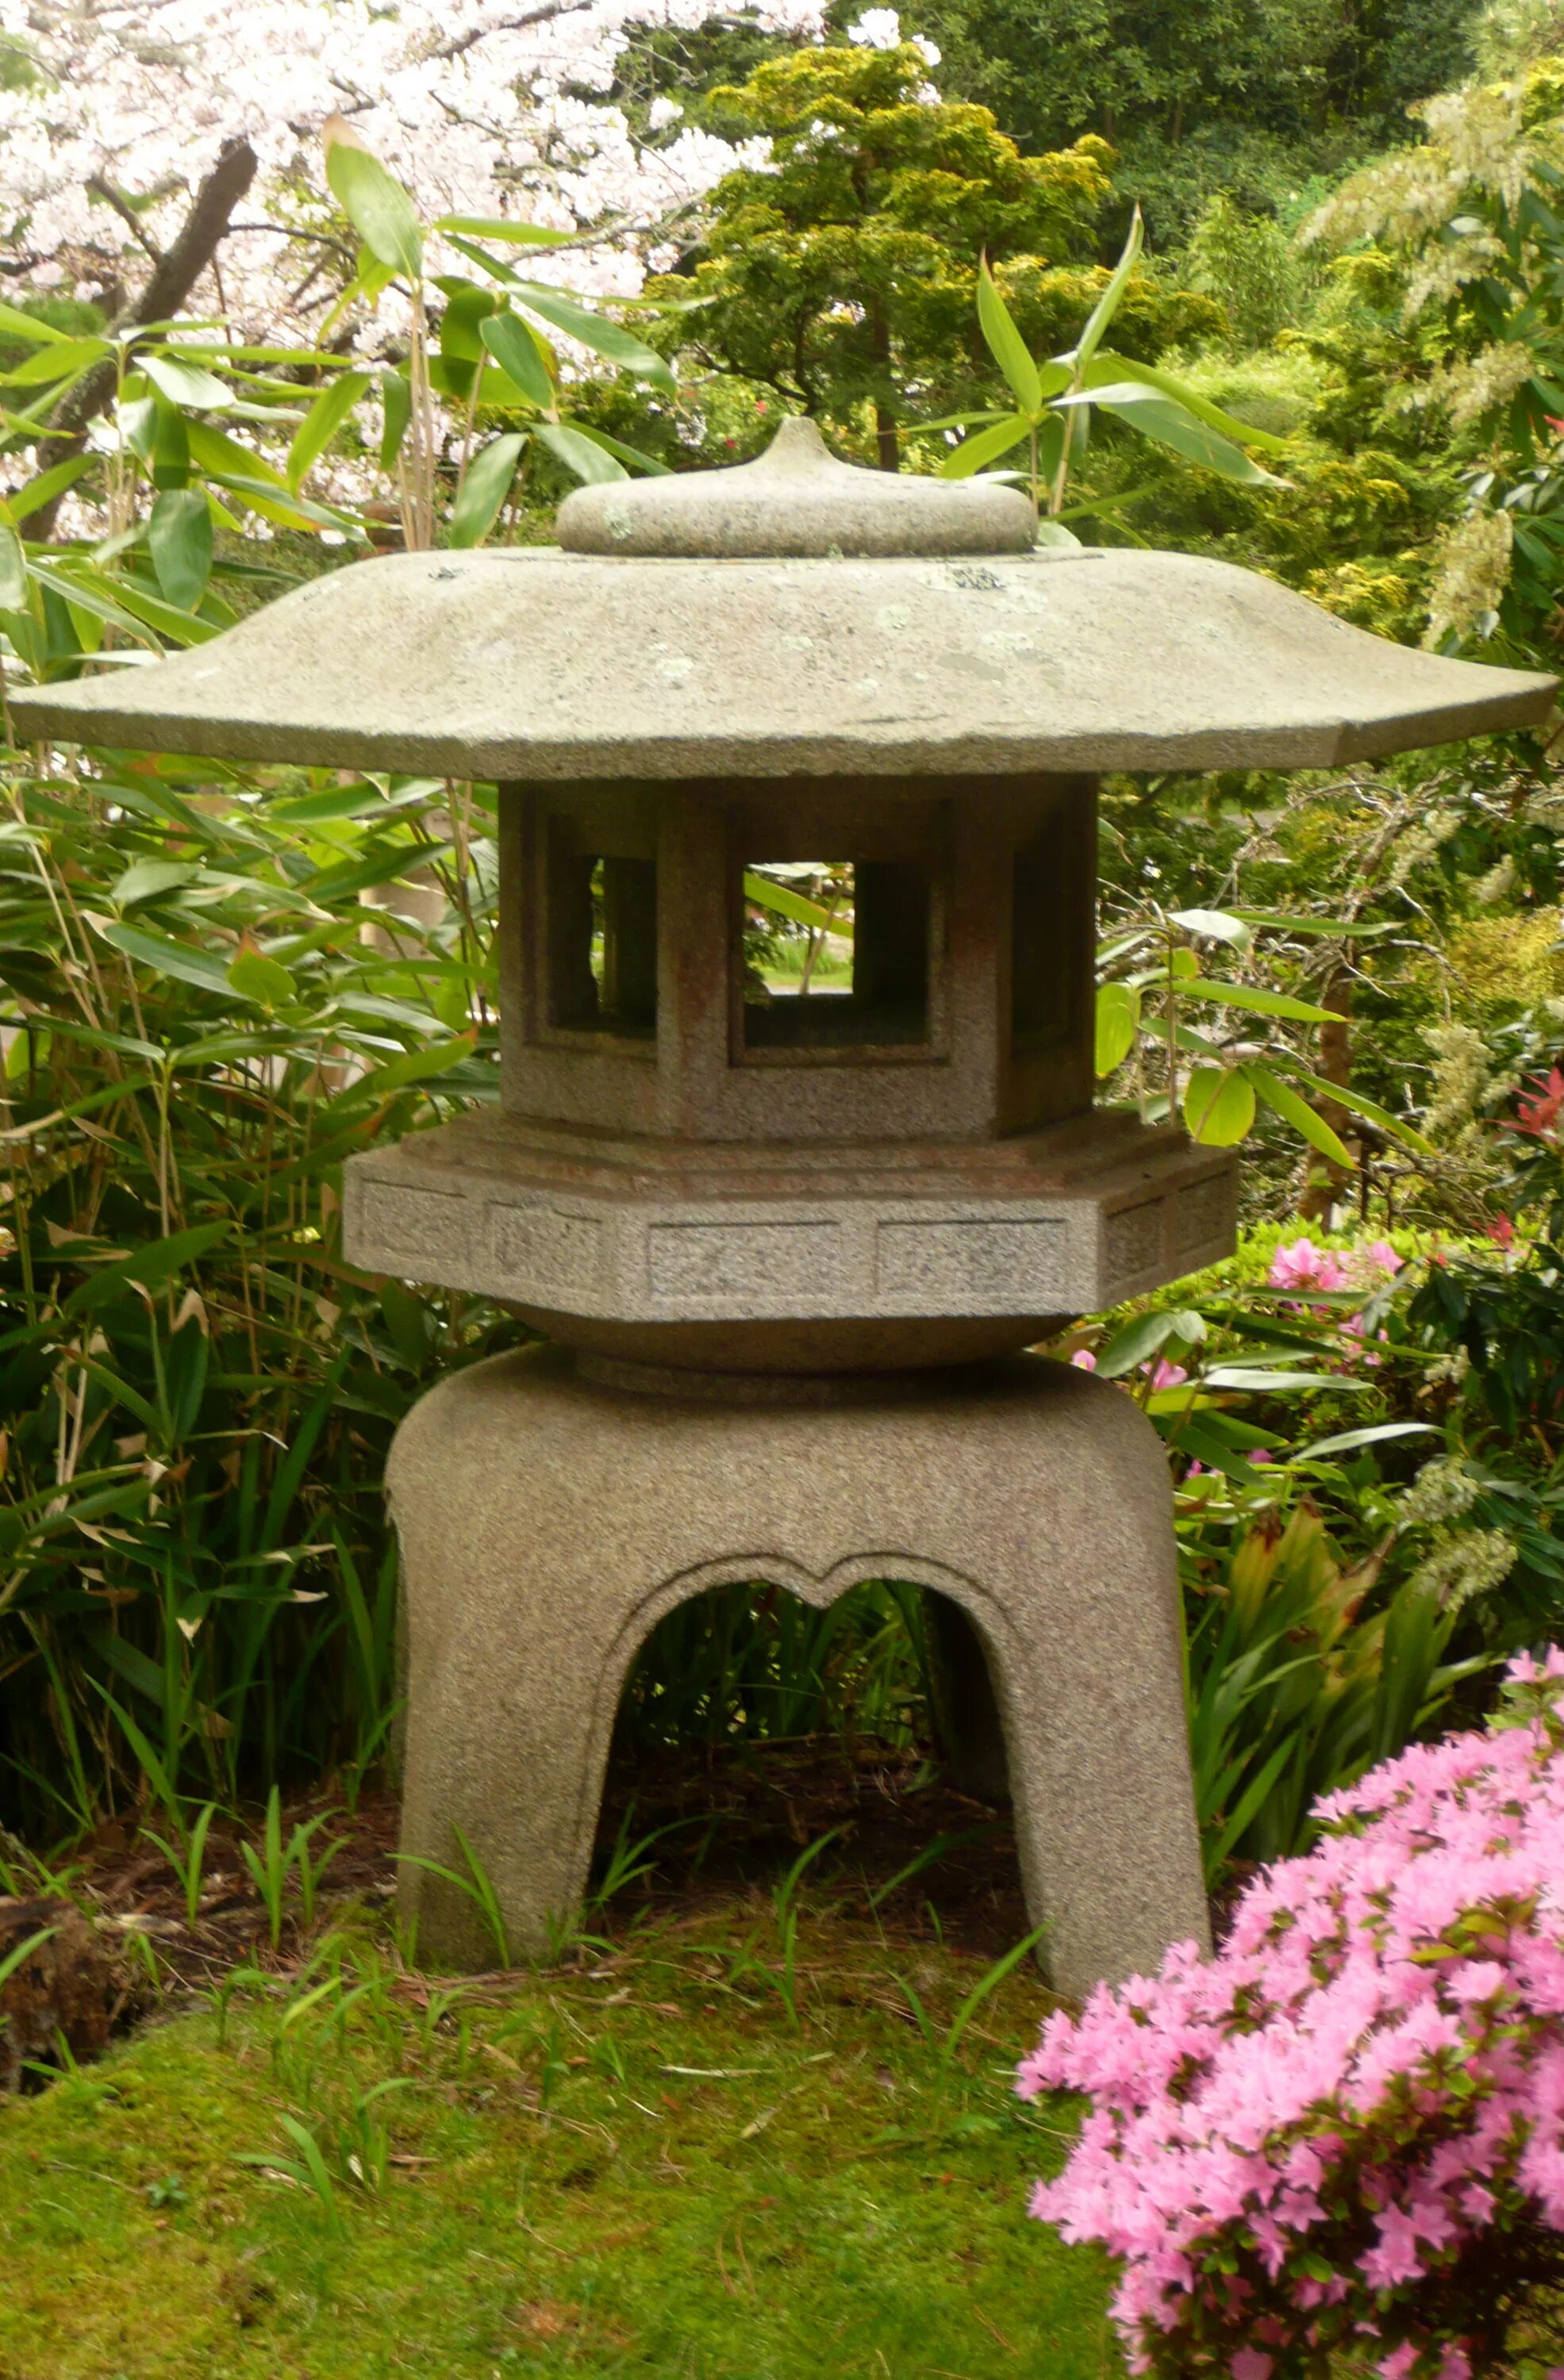 Юкими Торо. Японский фонарь Юкими Торо. Юкими гата фонарь. Японский фонарь цикубаи. Японский садовый фонарь